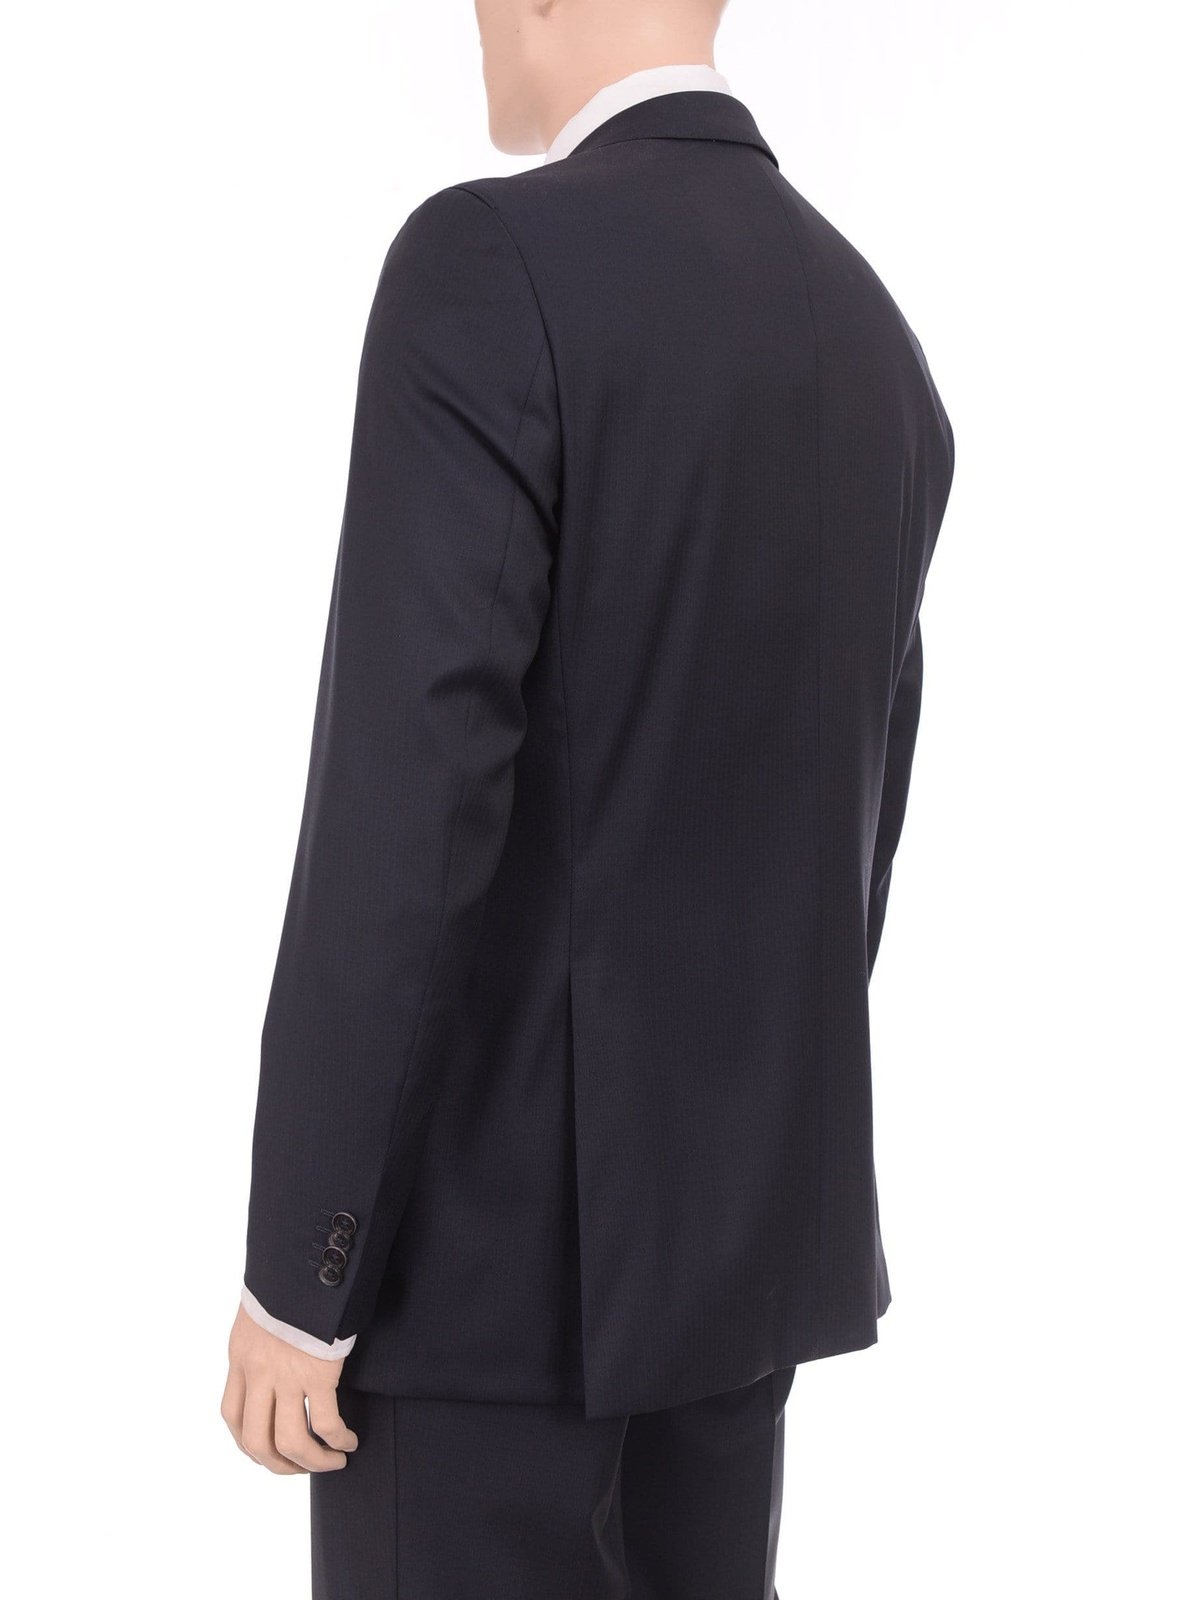 HUGO BOSS TWO PIECE SUITS Hugo Boss Edison1/power Classic Fit Navy Blue Tonal Herringbone Wool Suit